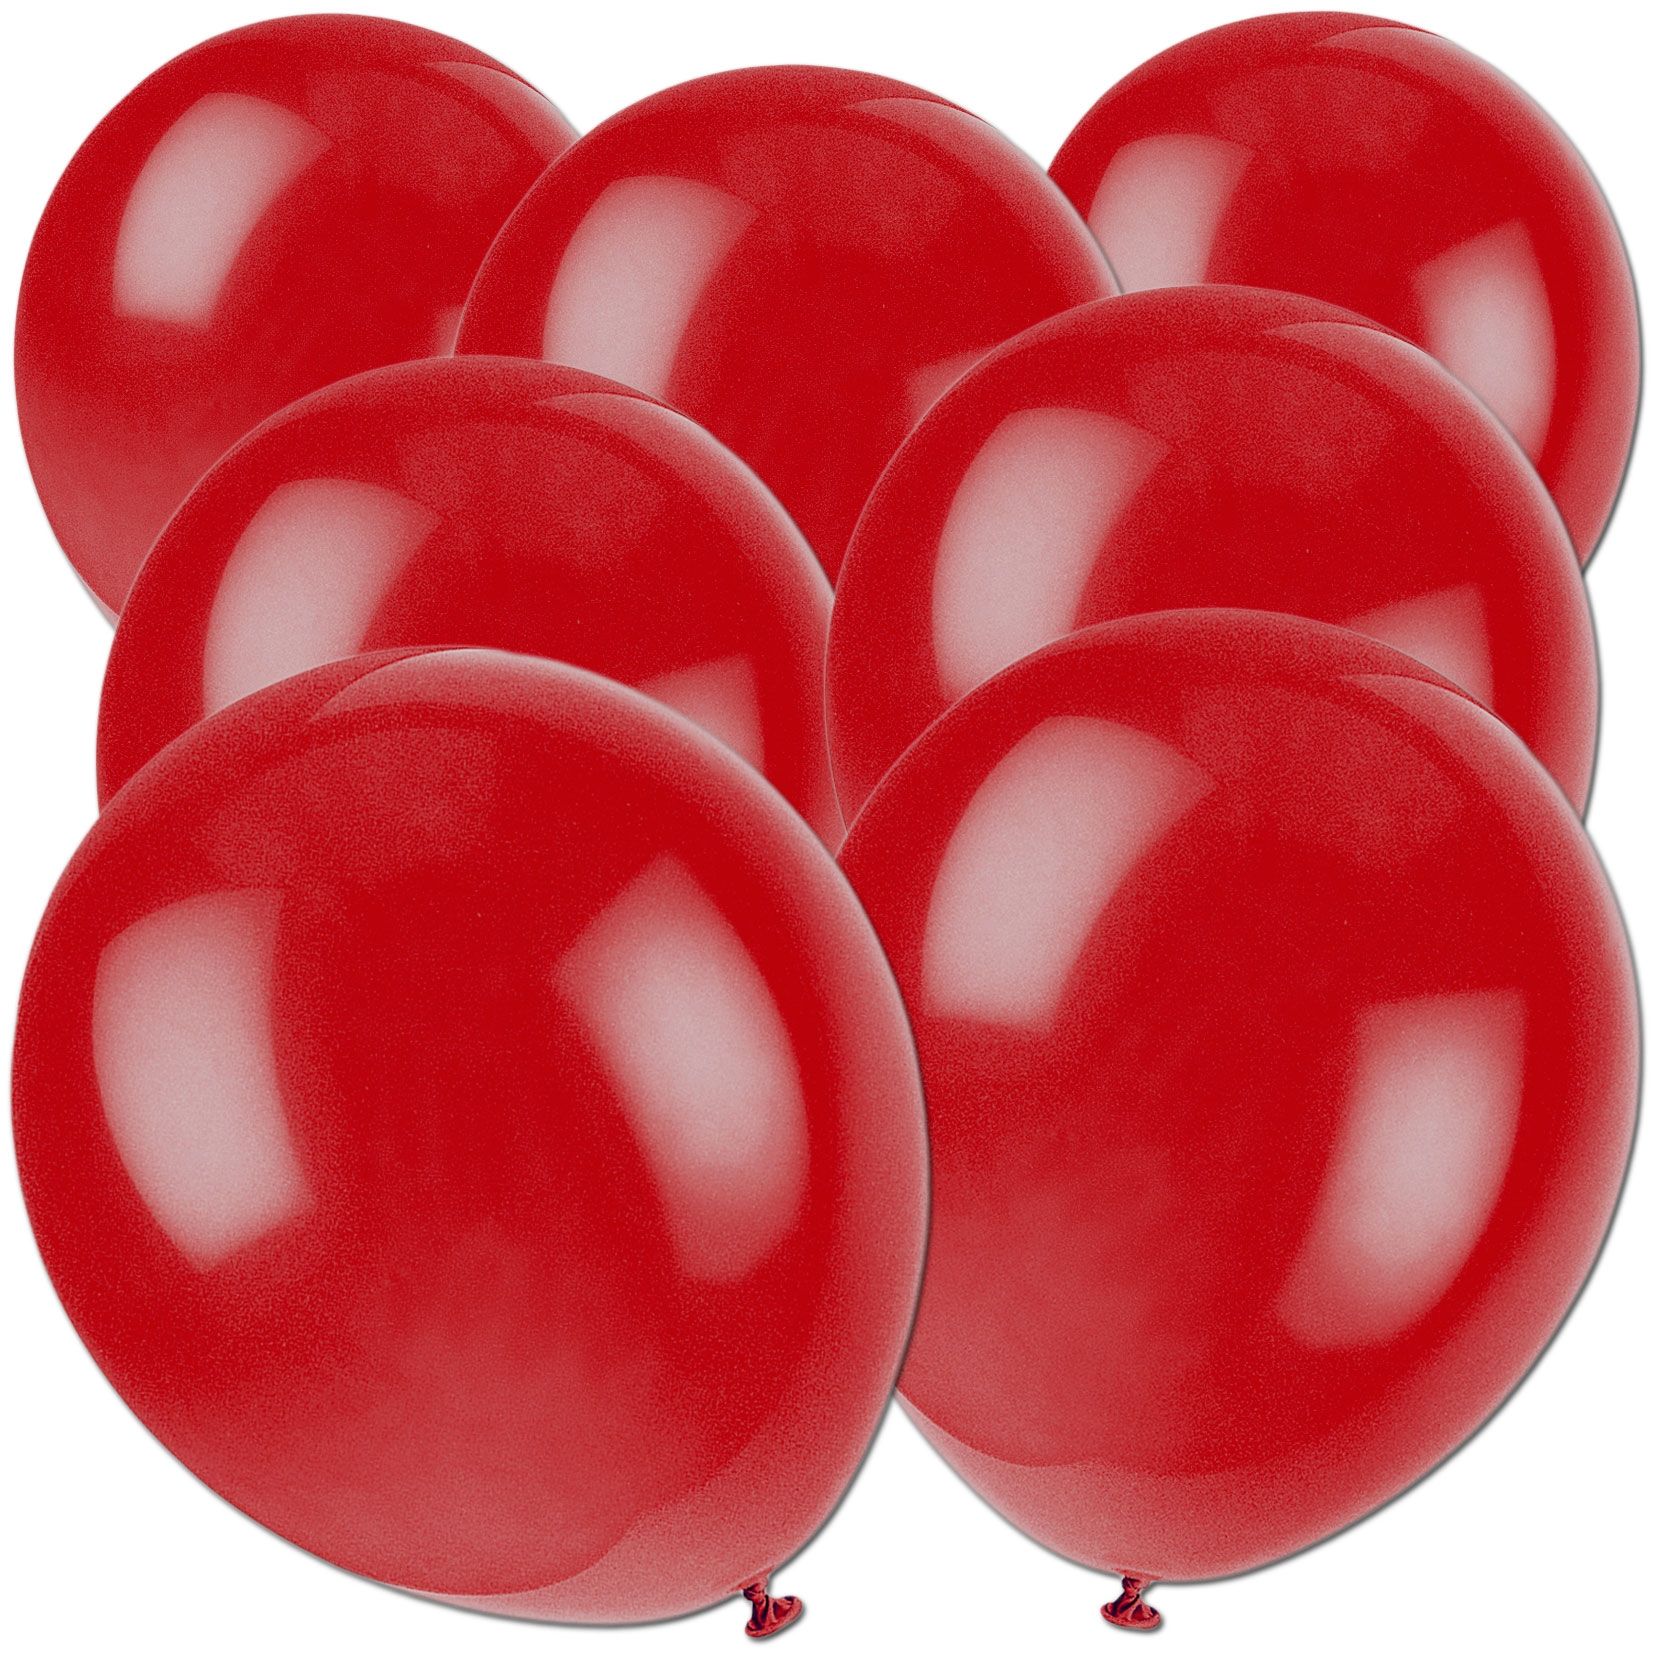 Luftballons dunkelrot, 50 St., 30cm, einfarbige Ballons, kräftiges Rot